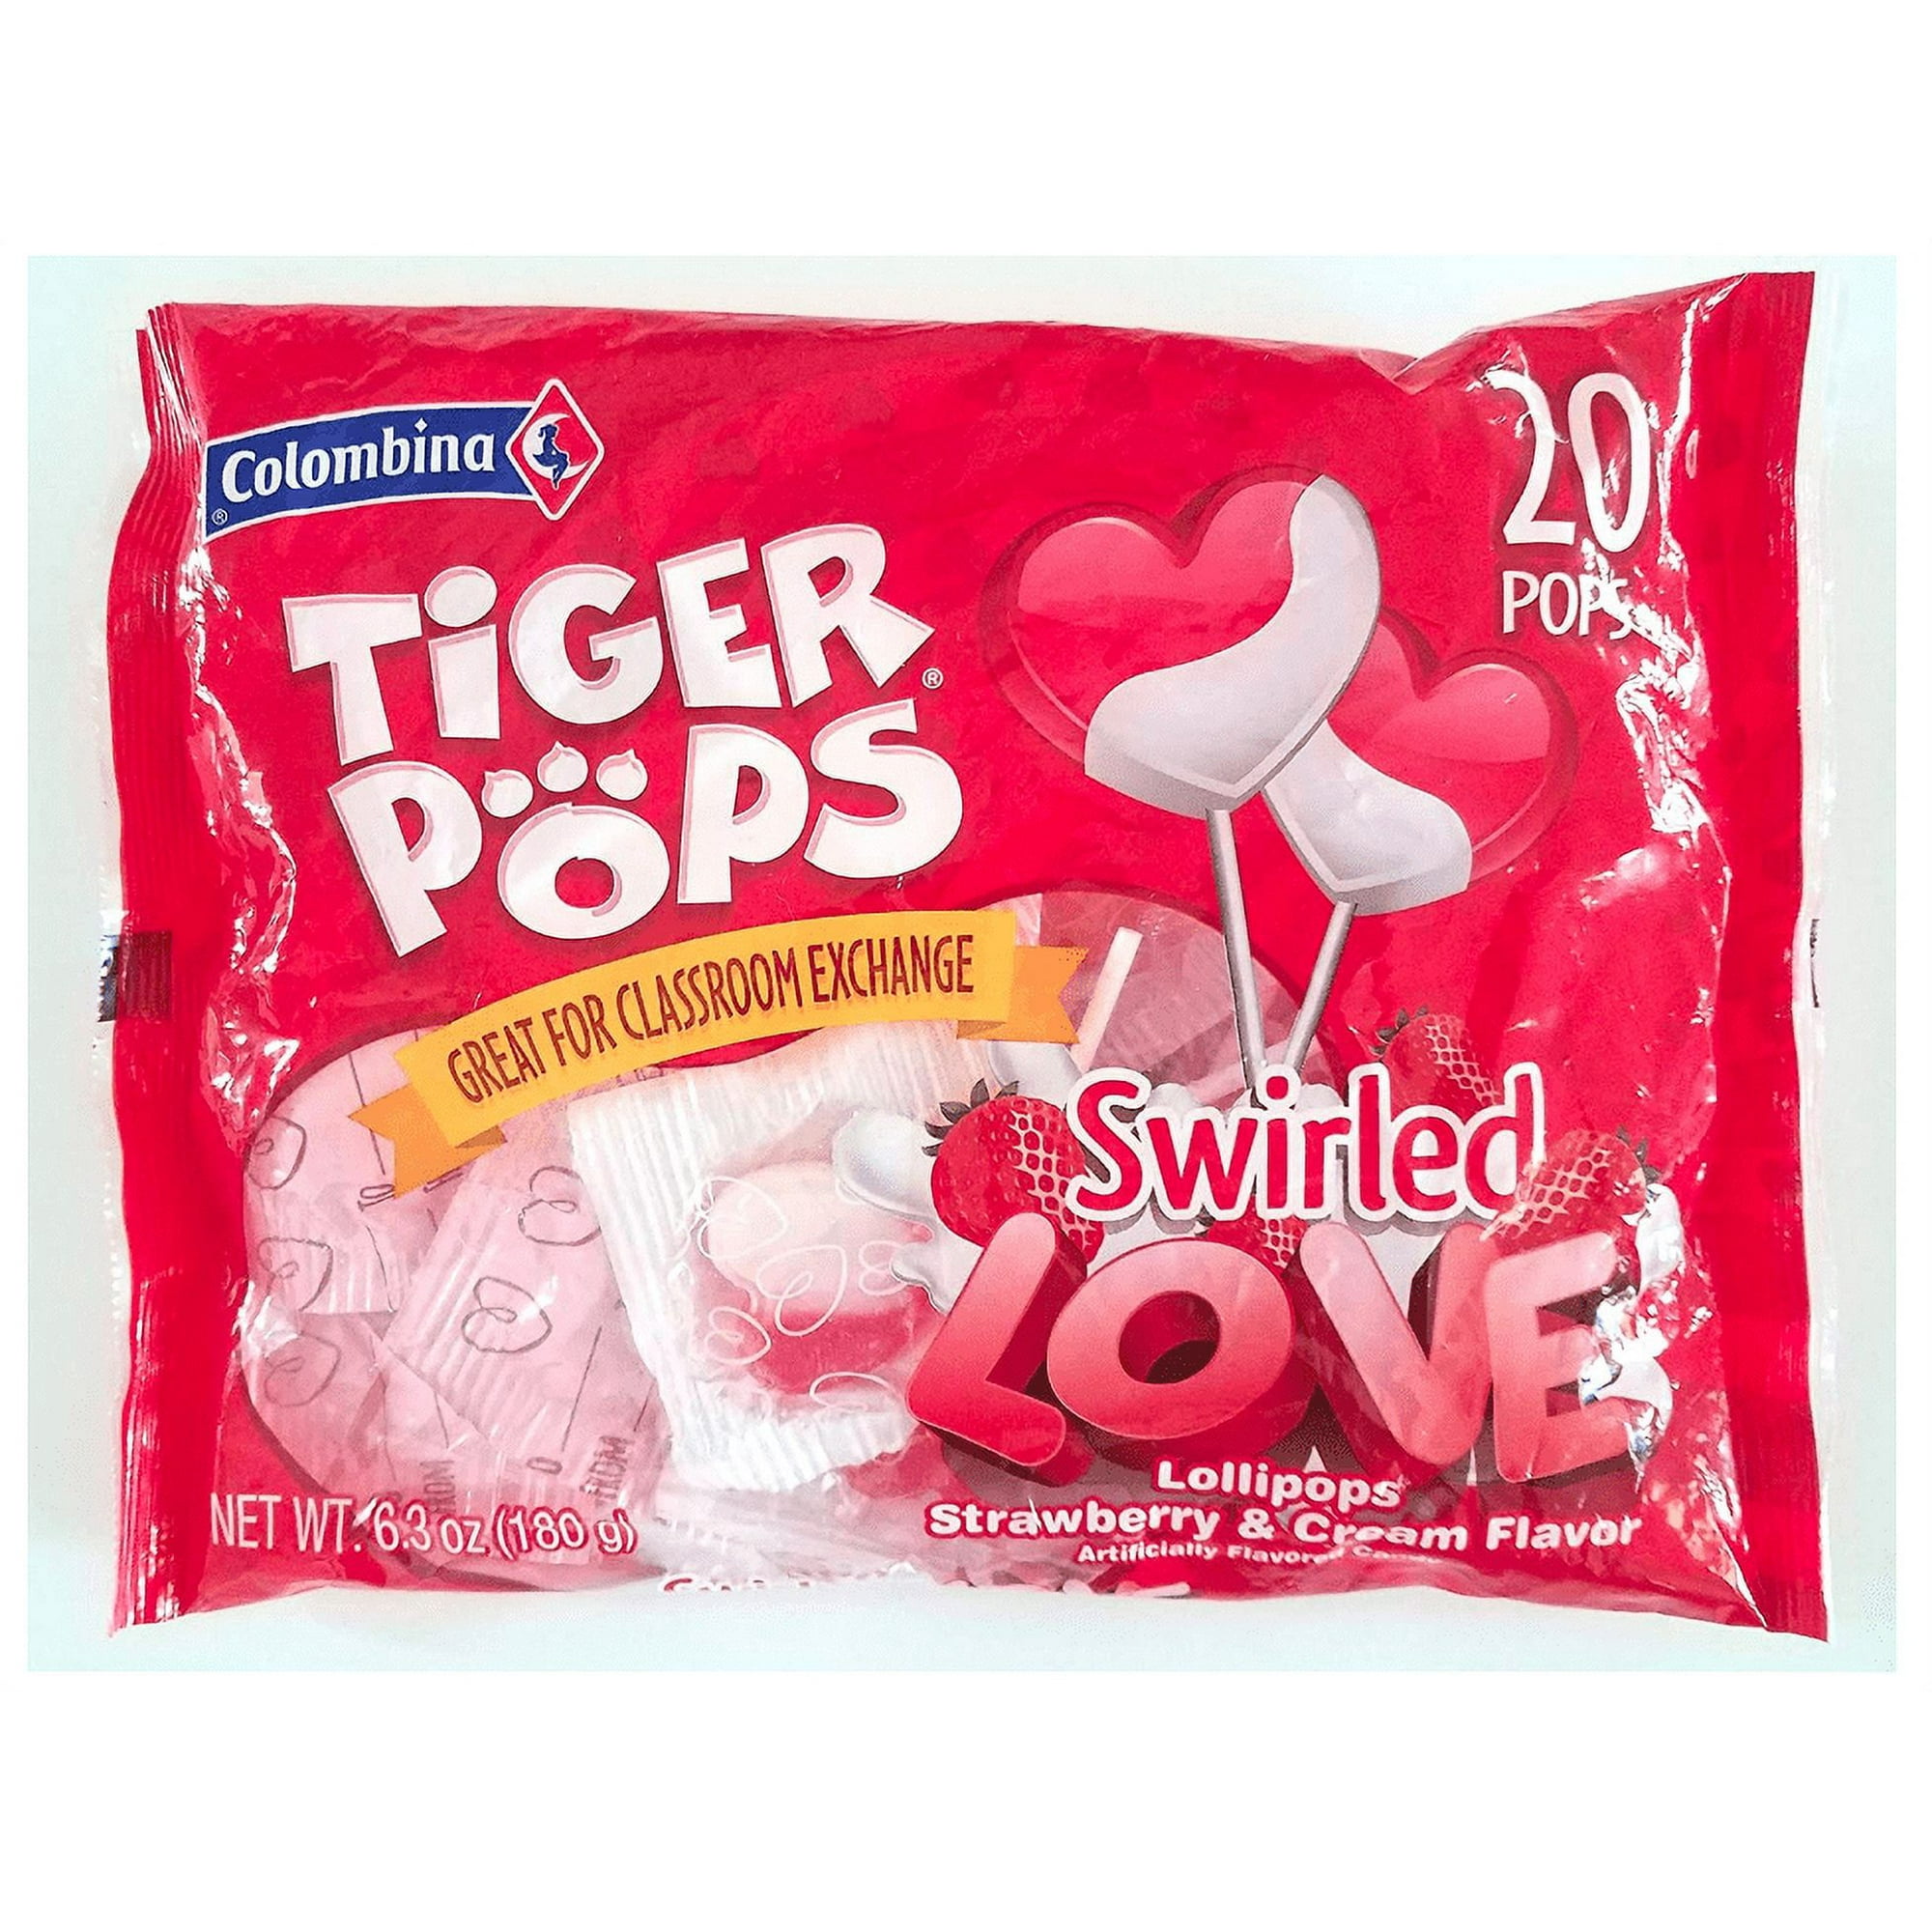 Colombina (1 Bag) Tiger Pops Valentine Candy - 20 Swirled Heart Love  Lollipops - Strawberry & Cream Flavor - Red & White - 6.3 oz / 180 g